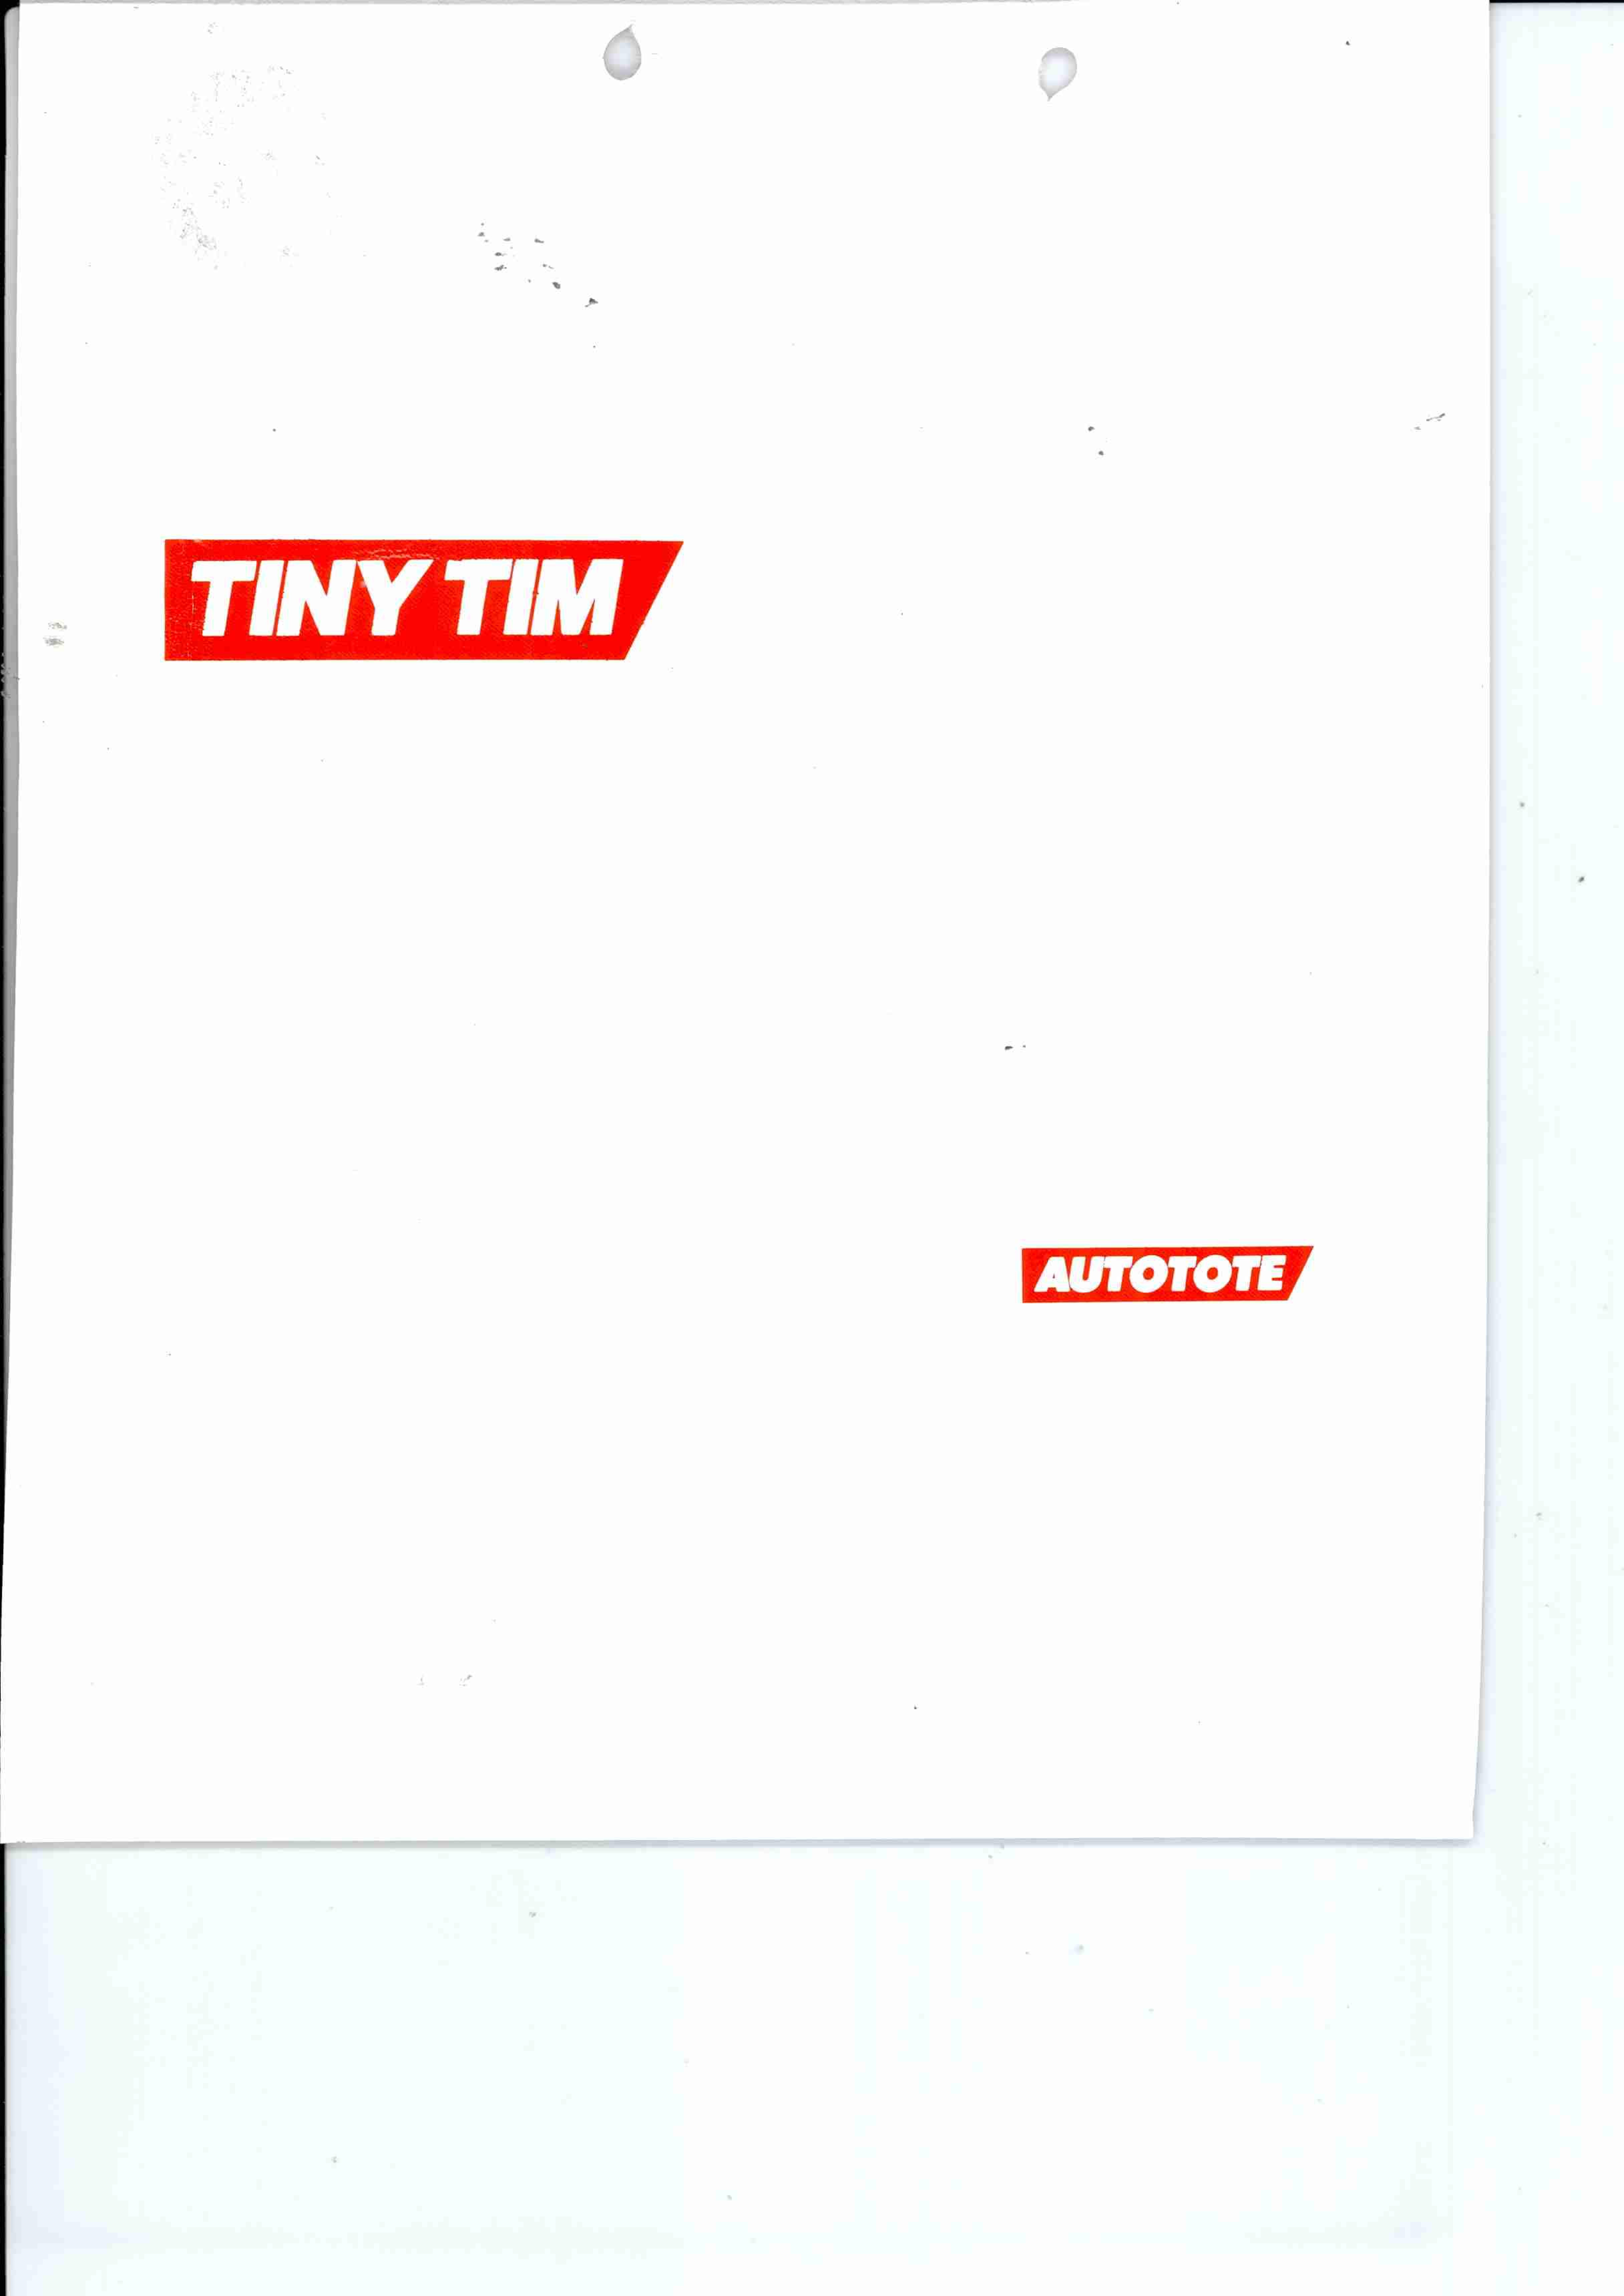 TINY TIM